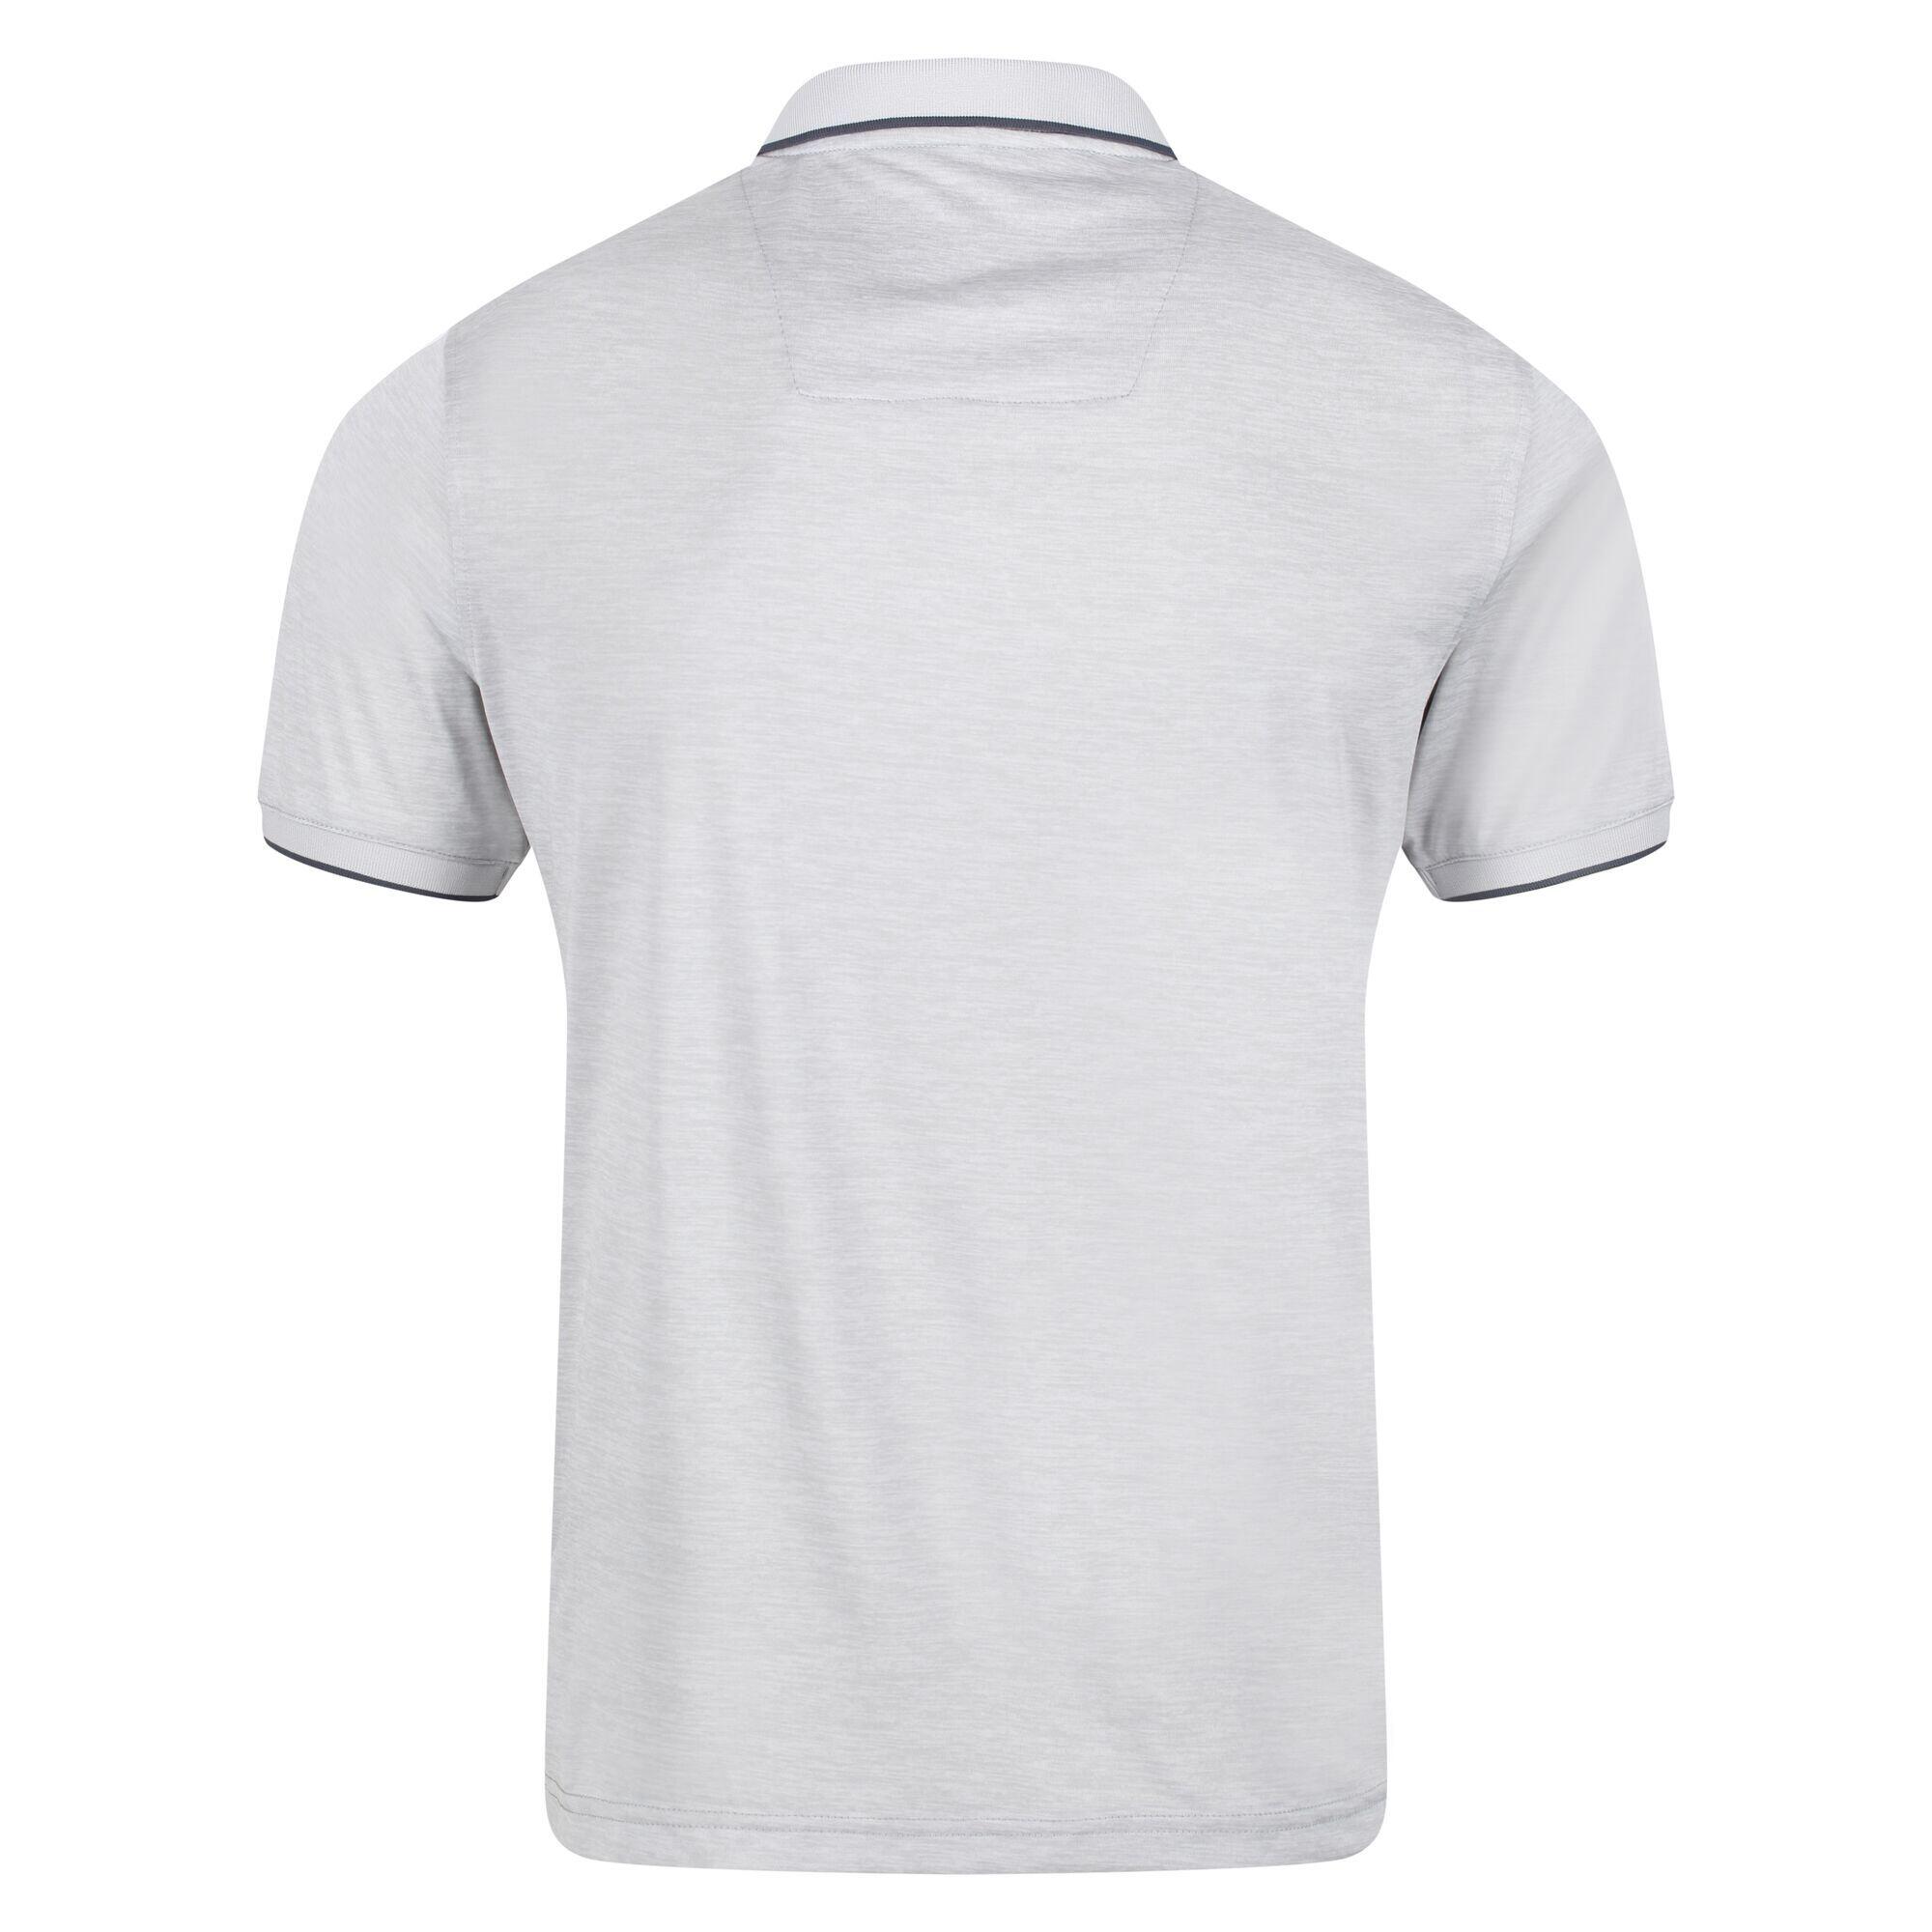 Remex II Men's Fitness T-Shirt - Pale Grey 6/6